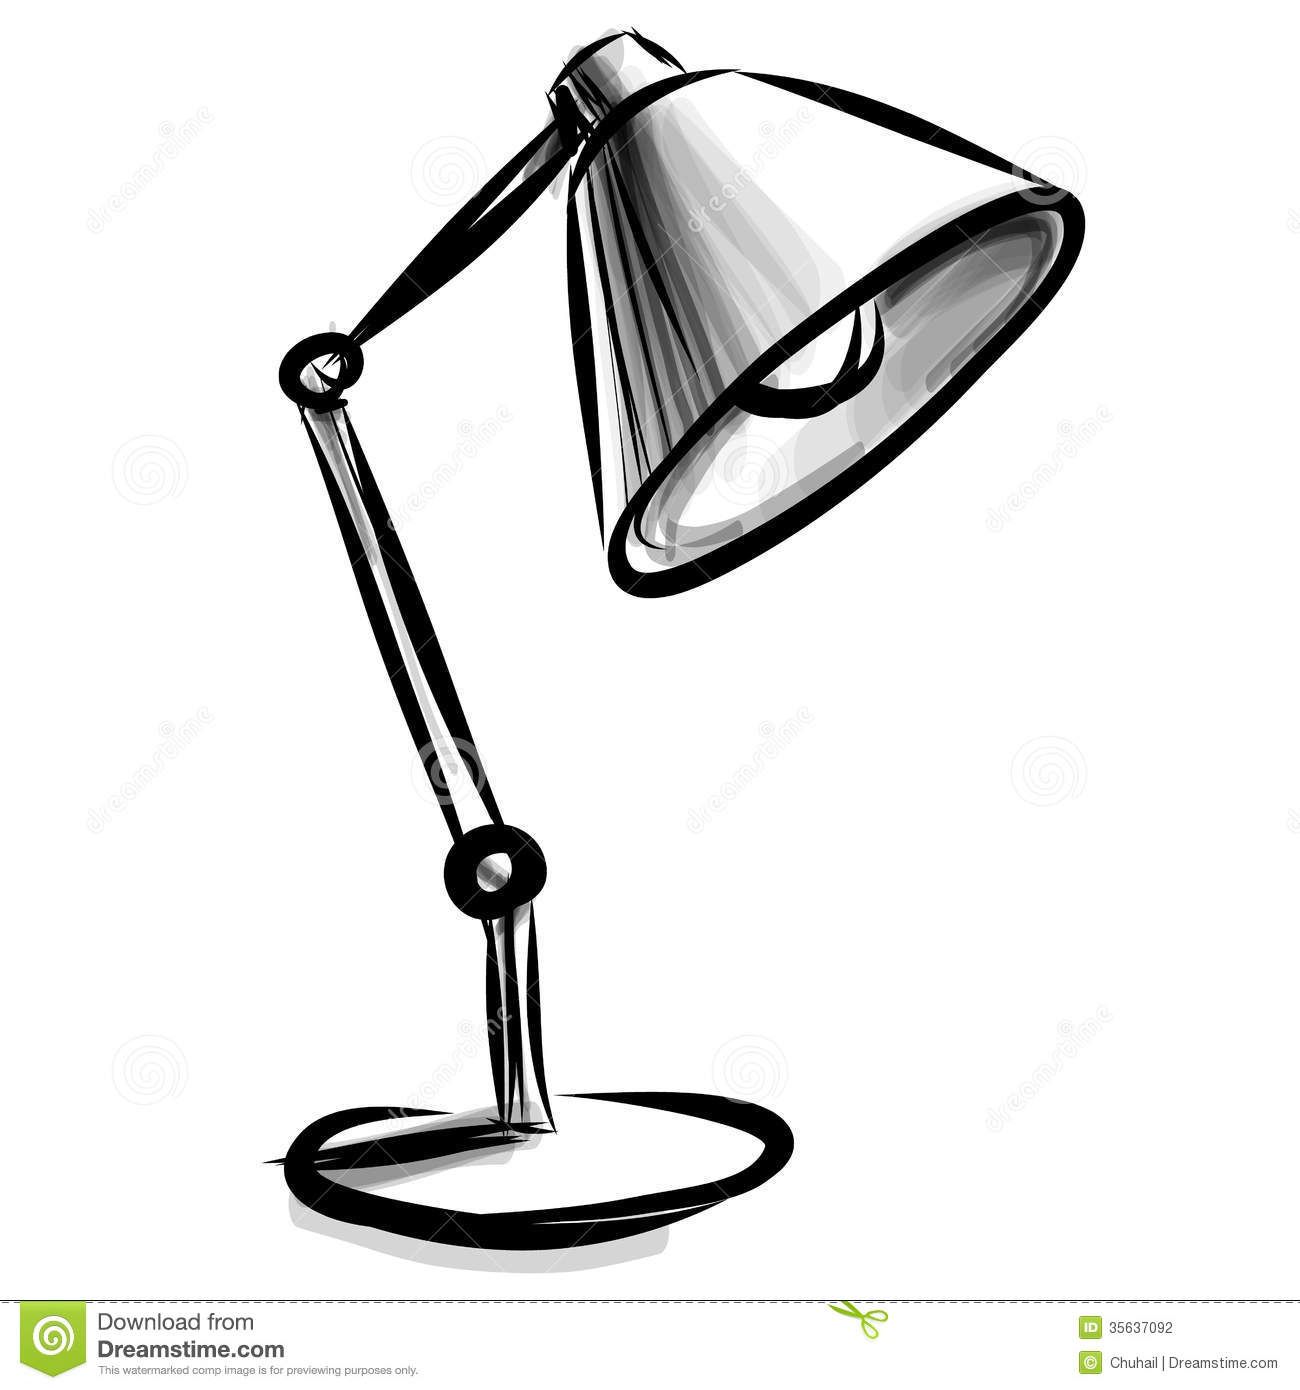 lamp clipart study lamp